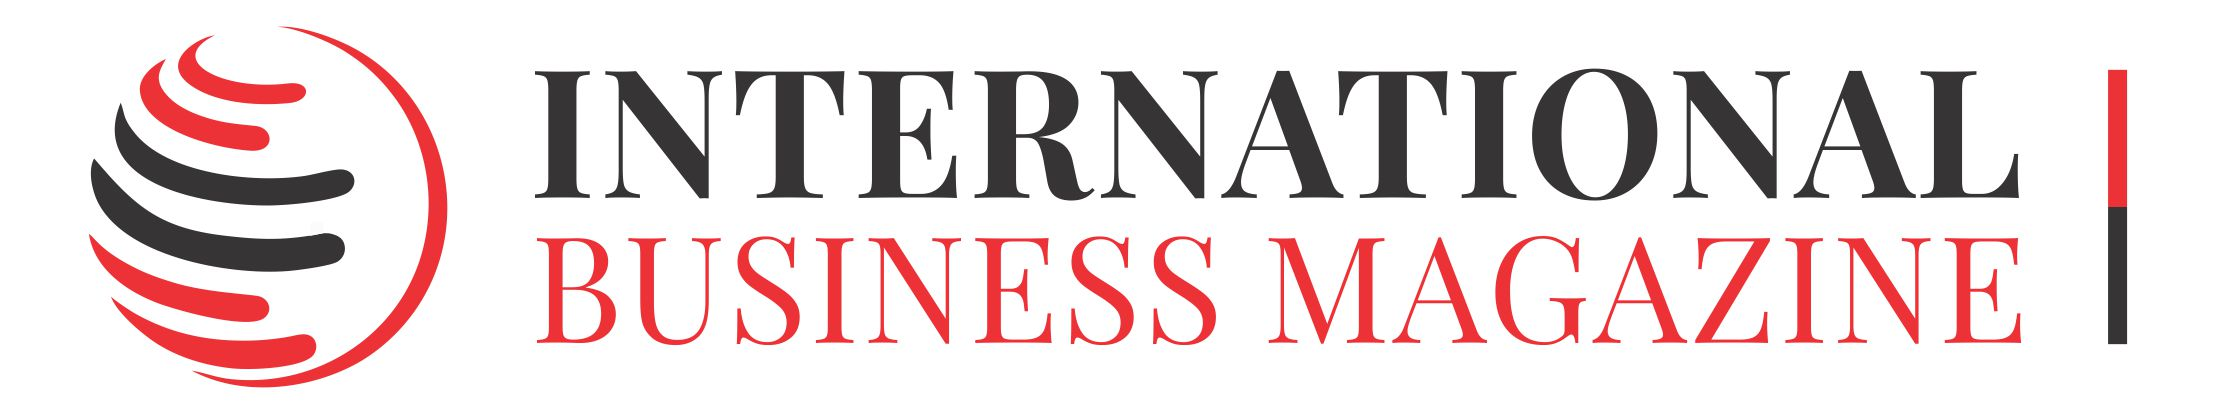 International-Business-Magazine